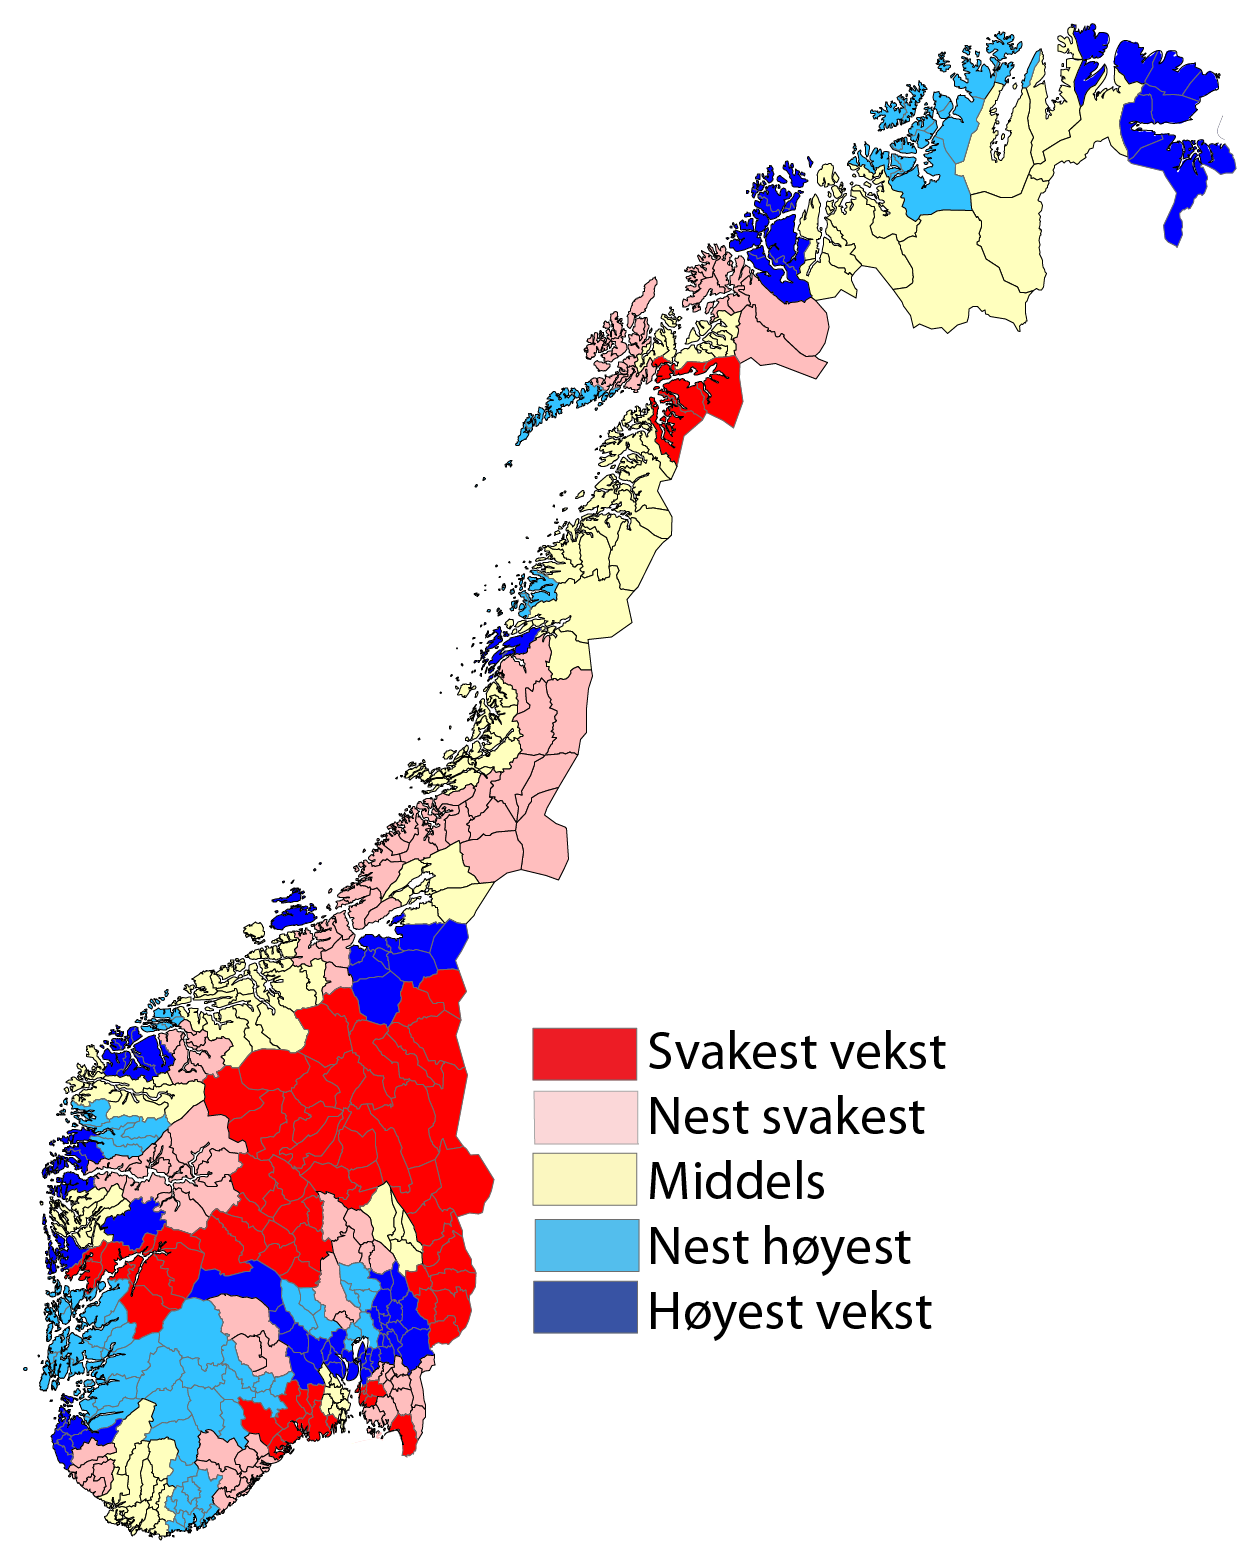 1 Hitra/Frøya 2 Stavangerregionen 3 Hordaland Vest 4 Øst-Finnmark 5 Voss (Region) 6 Nedre Romerike 7 Bergen (Region) 8